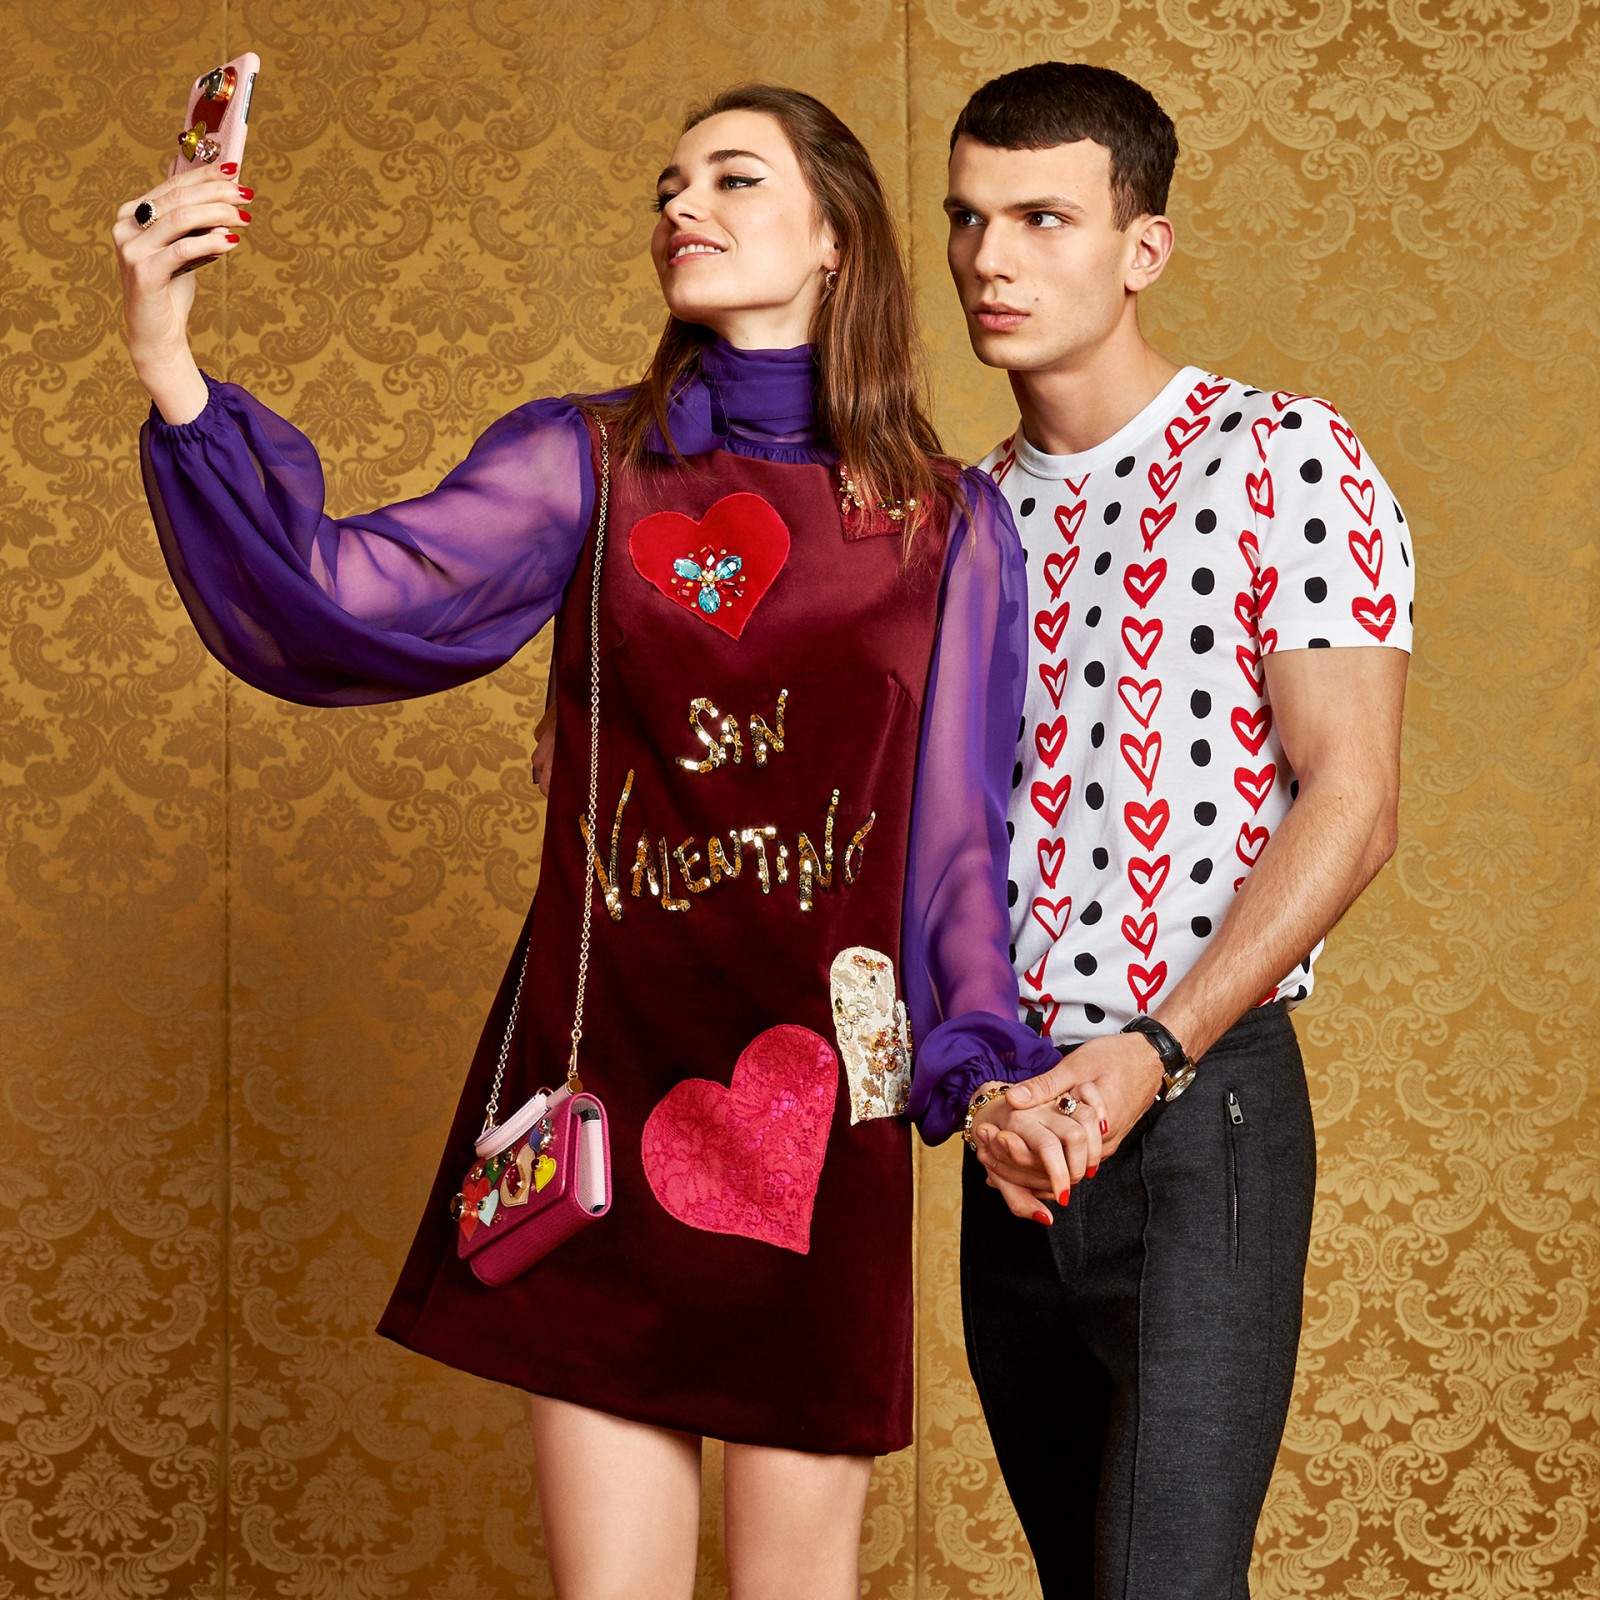 Amor & Moda: La colección San Valentín de Dolce & Gabbana